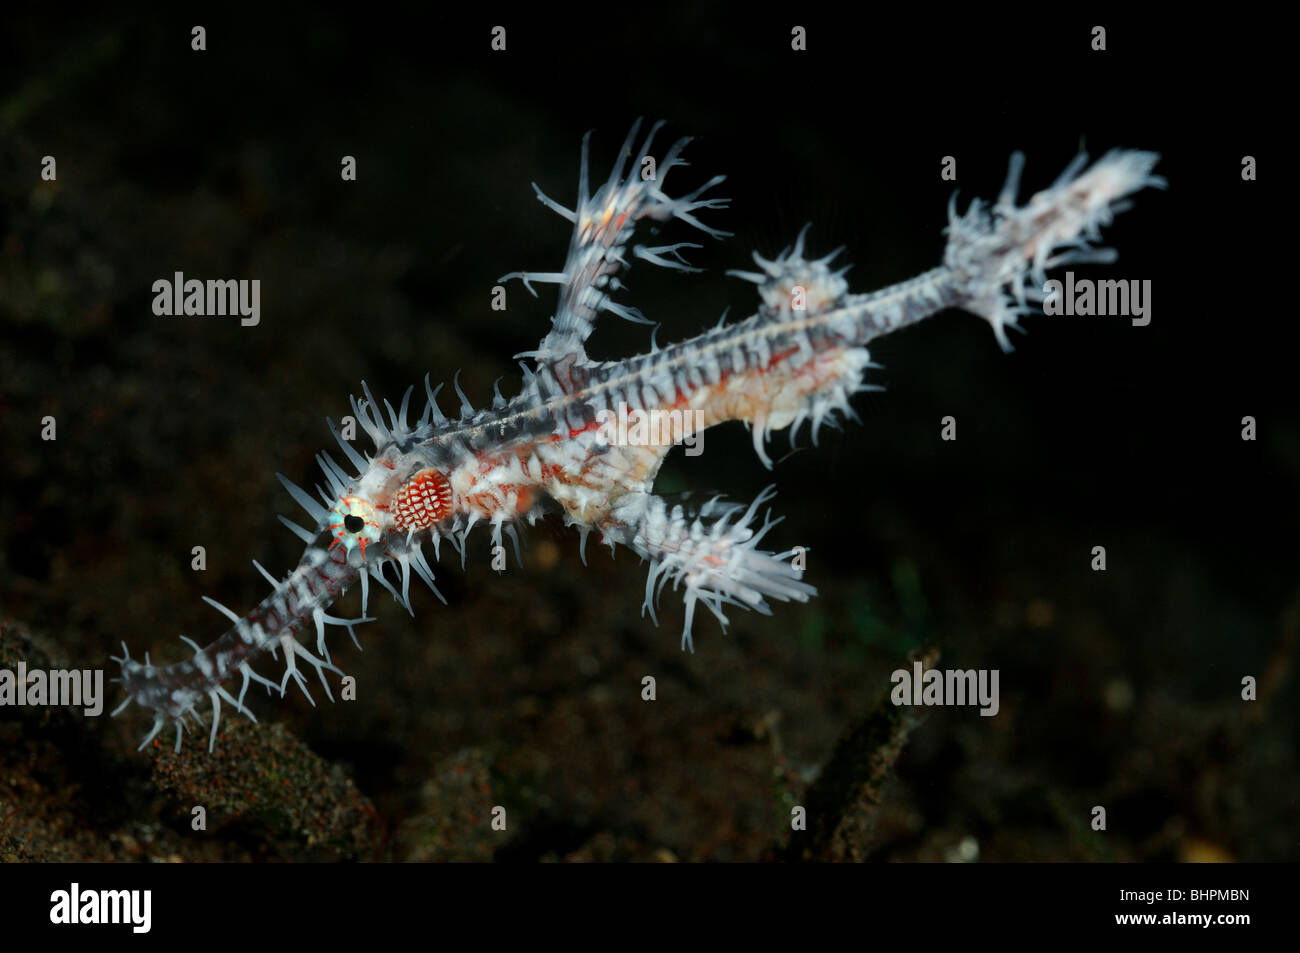 Solenostomus paradoxus, Arlecchino ghost pipefish ornate ghost pipefish, Alam Batu, housereef, Tulamben, Bali Foto Stock